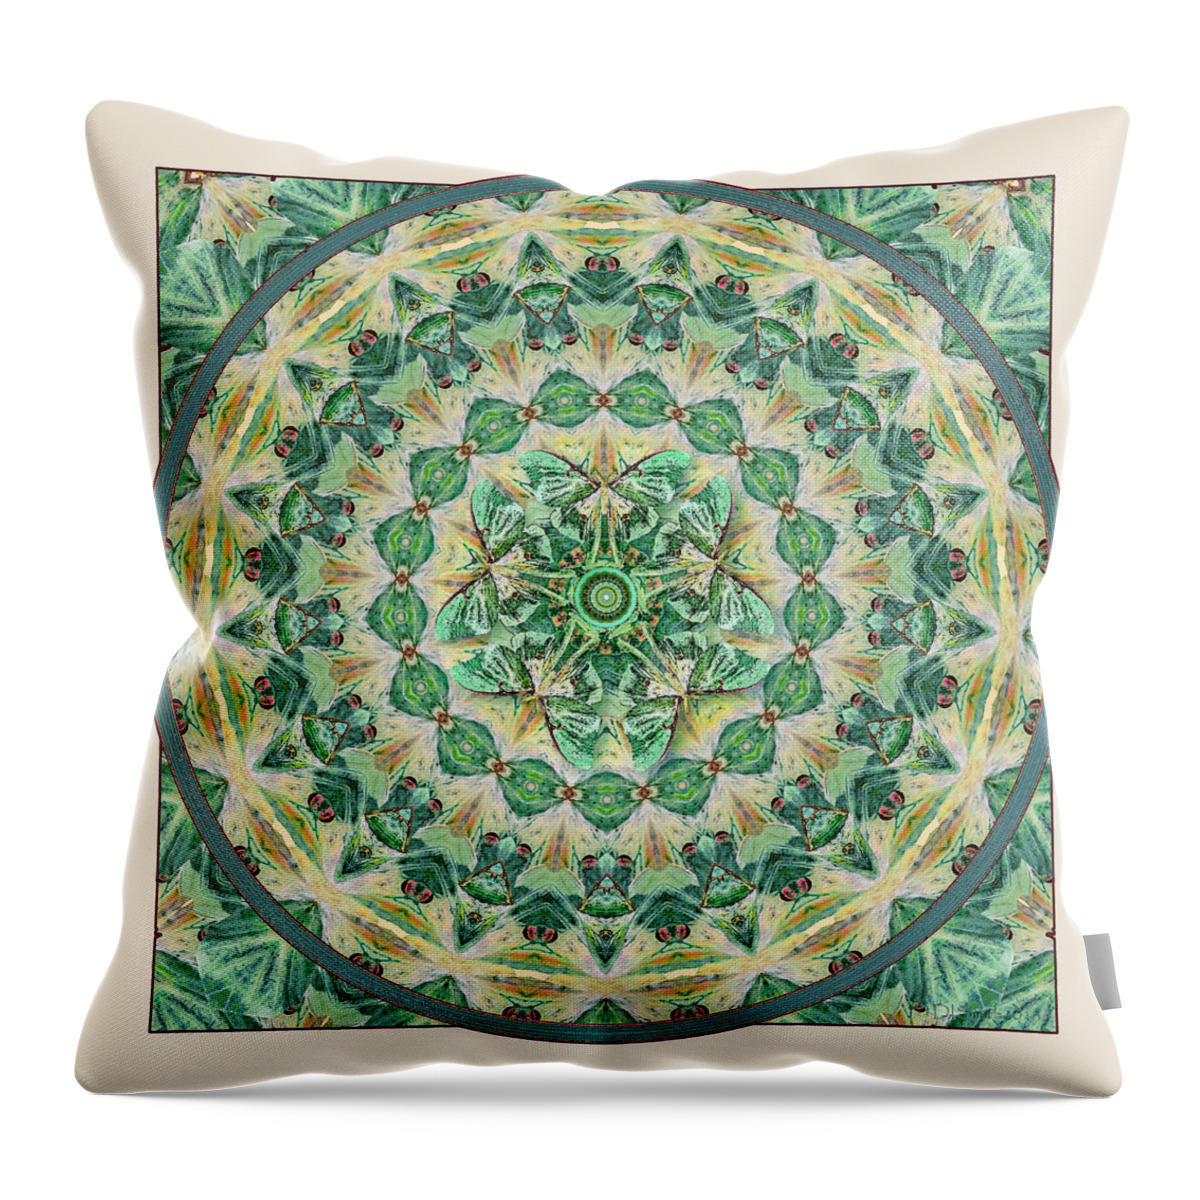 Art Throw Pillow featuring the digital art Luna Meditation Mandala by Deborah Smith